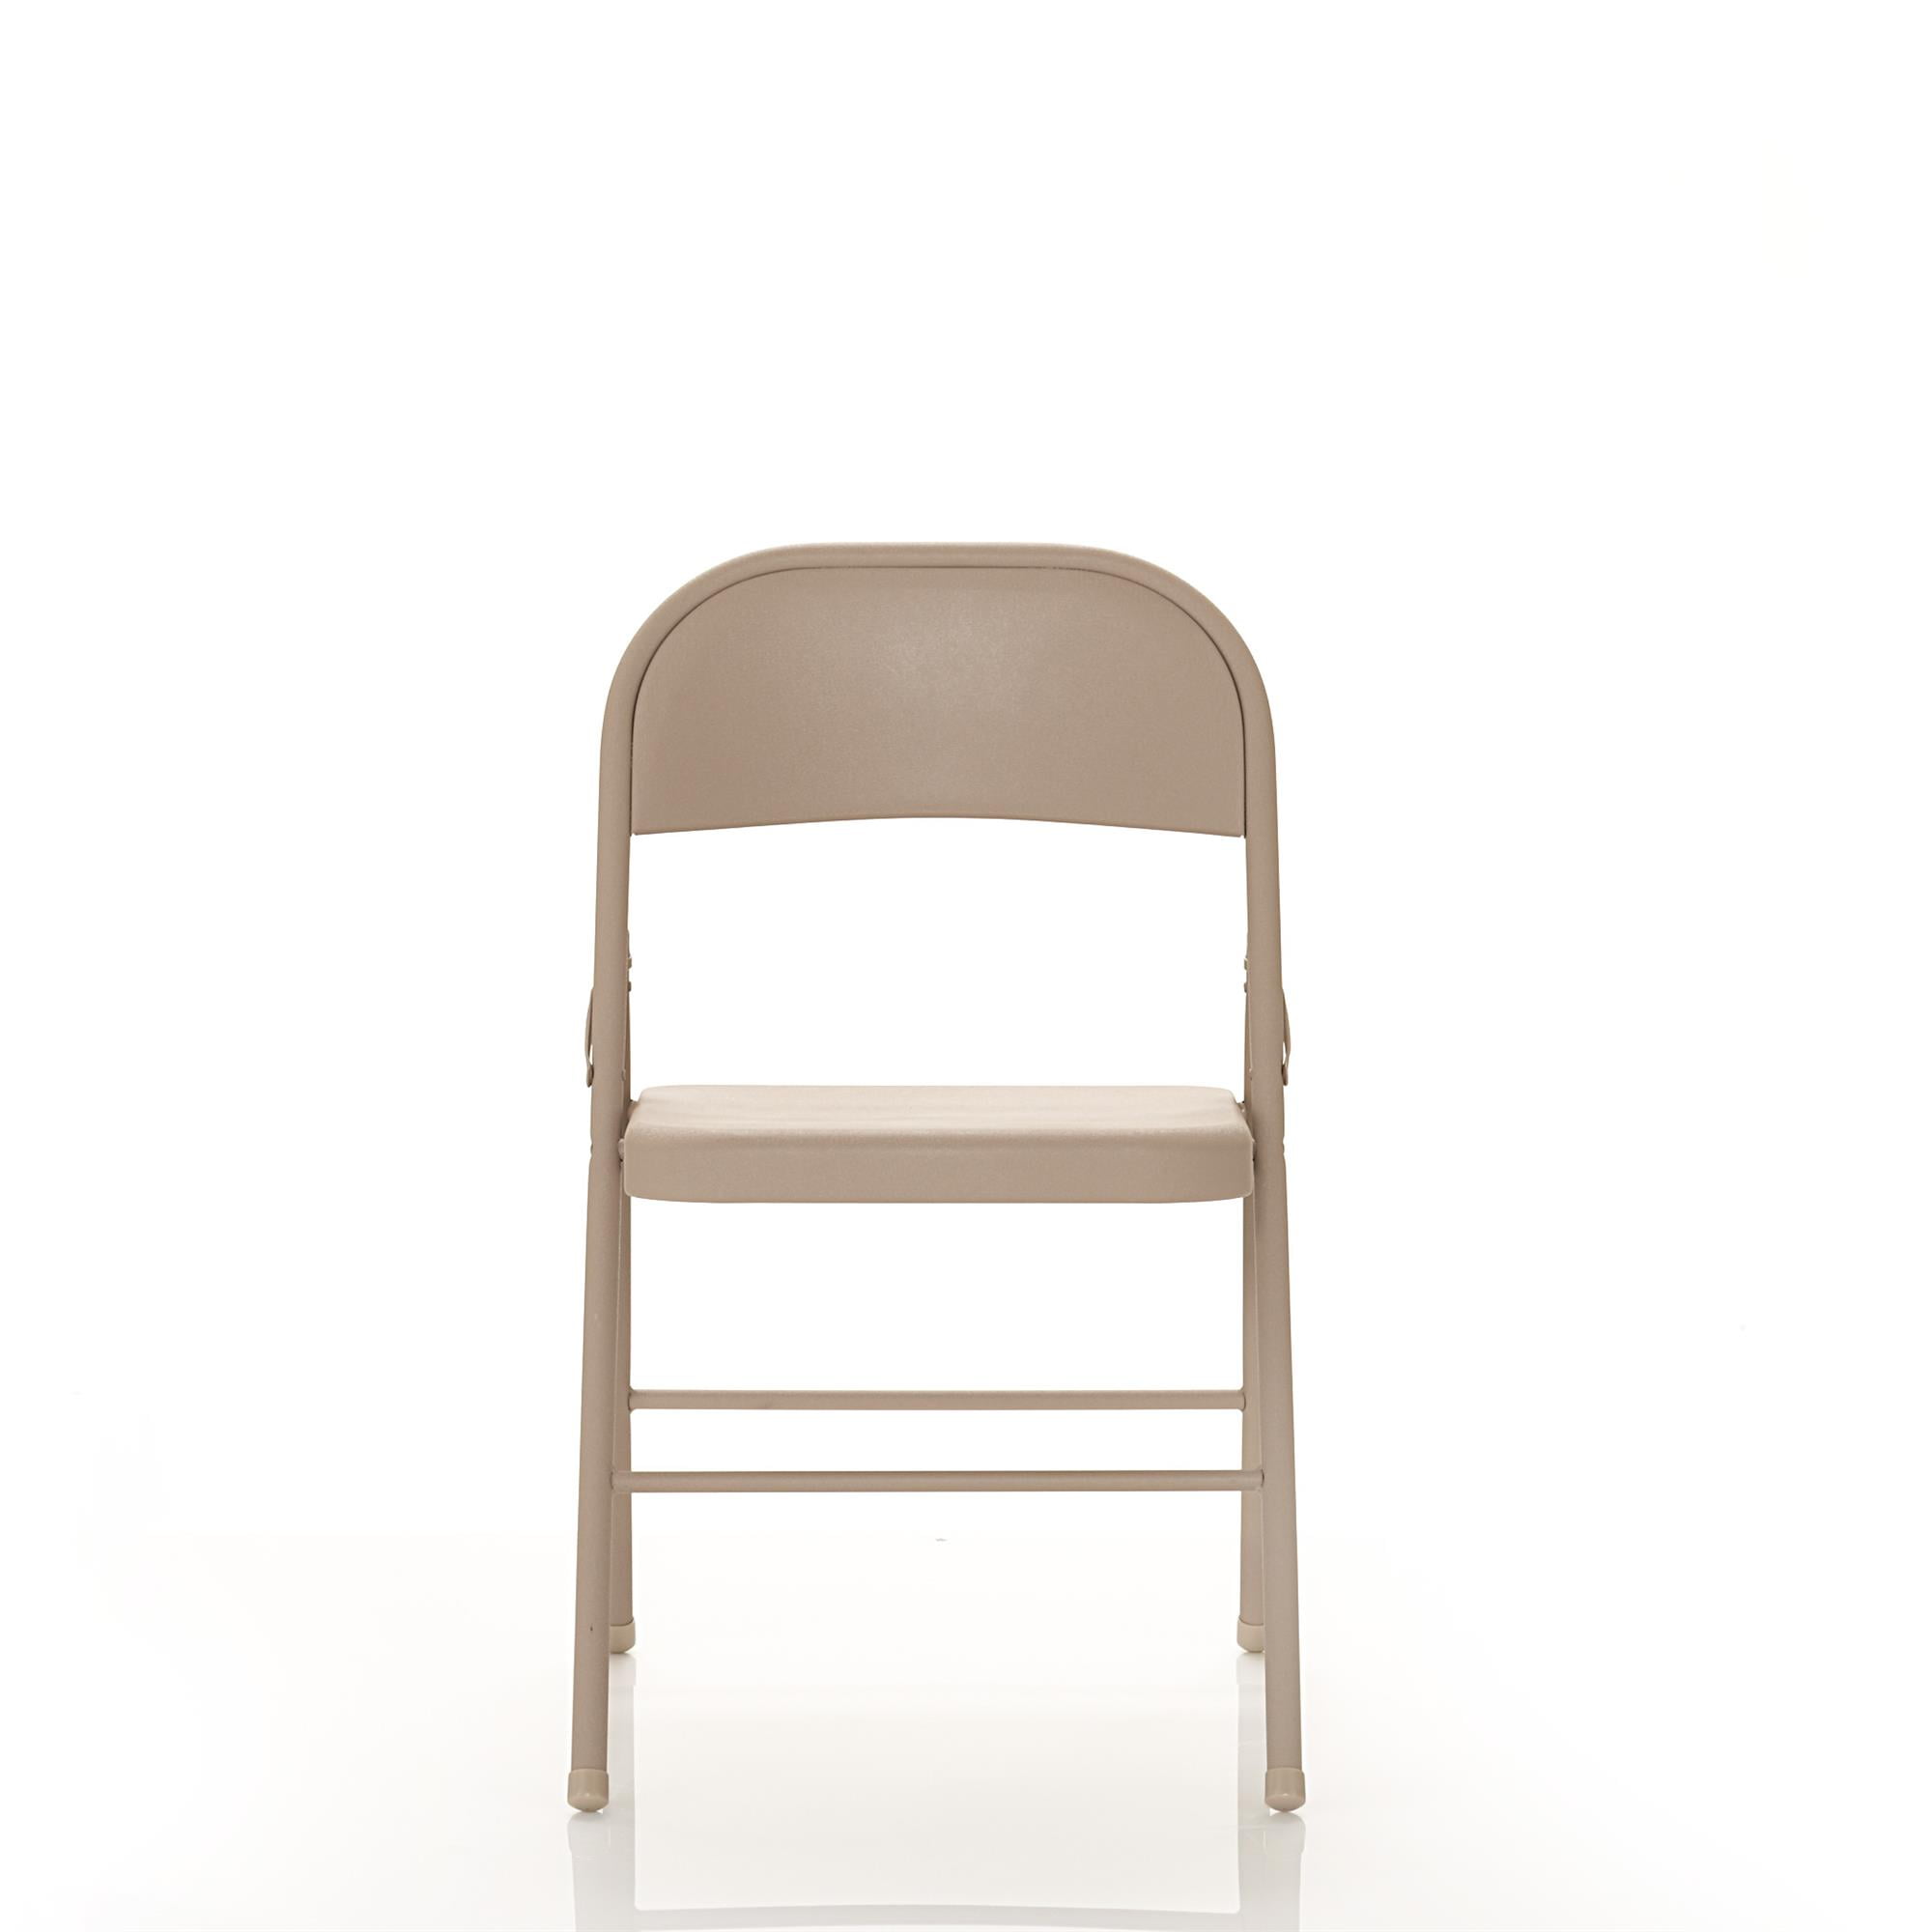 Mainstays Steel Folding Chair (4 Pack), Beige - 2